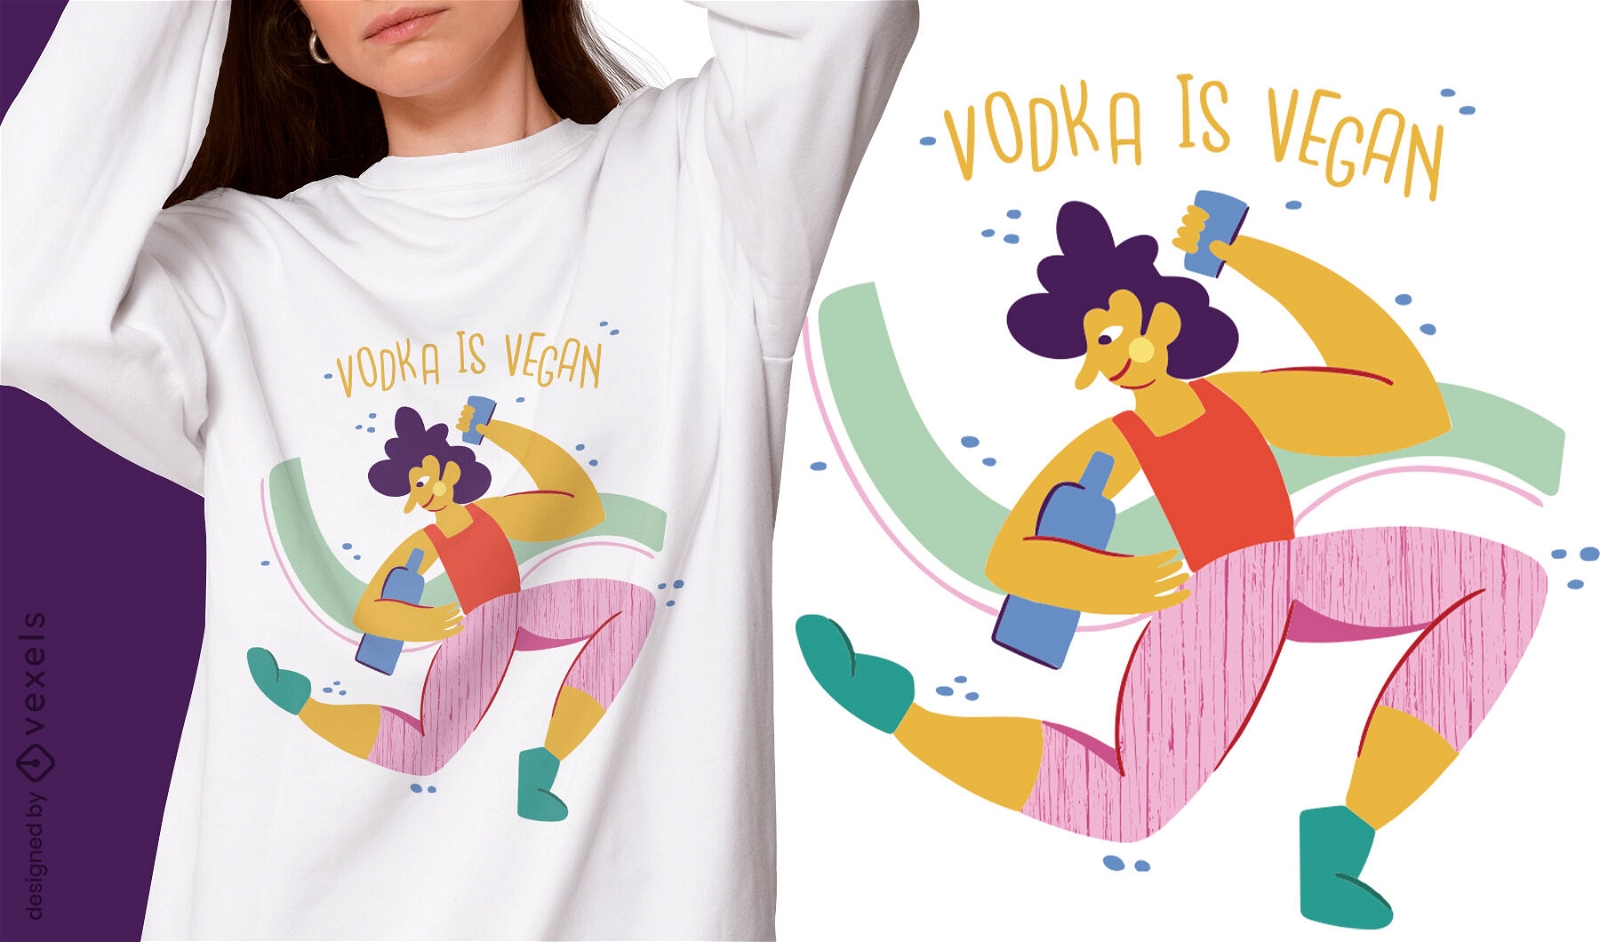 Divertido diseño de camiseta de vodka vegano.